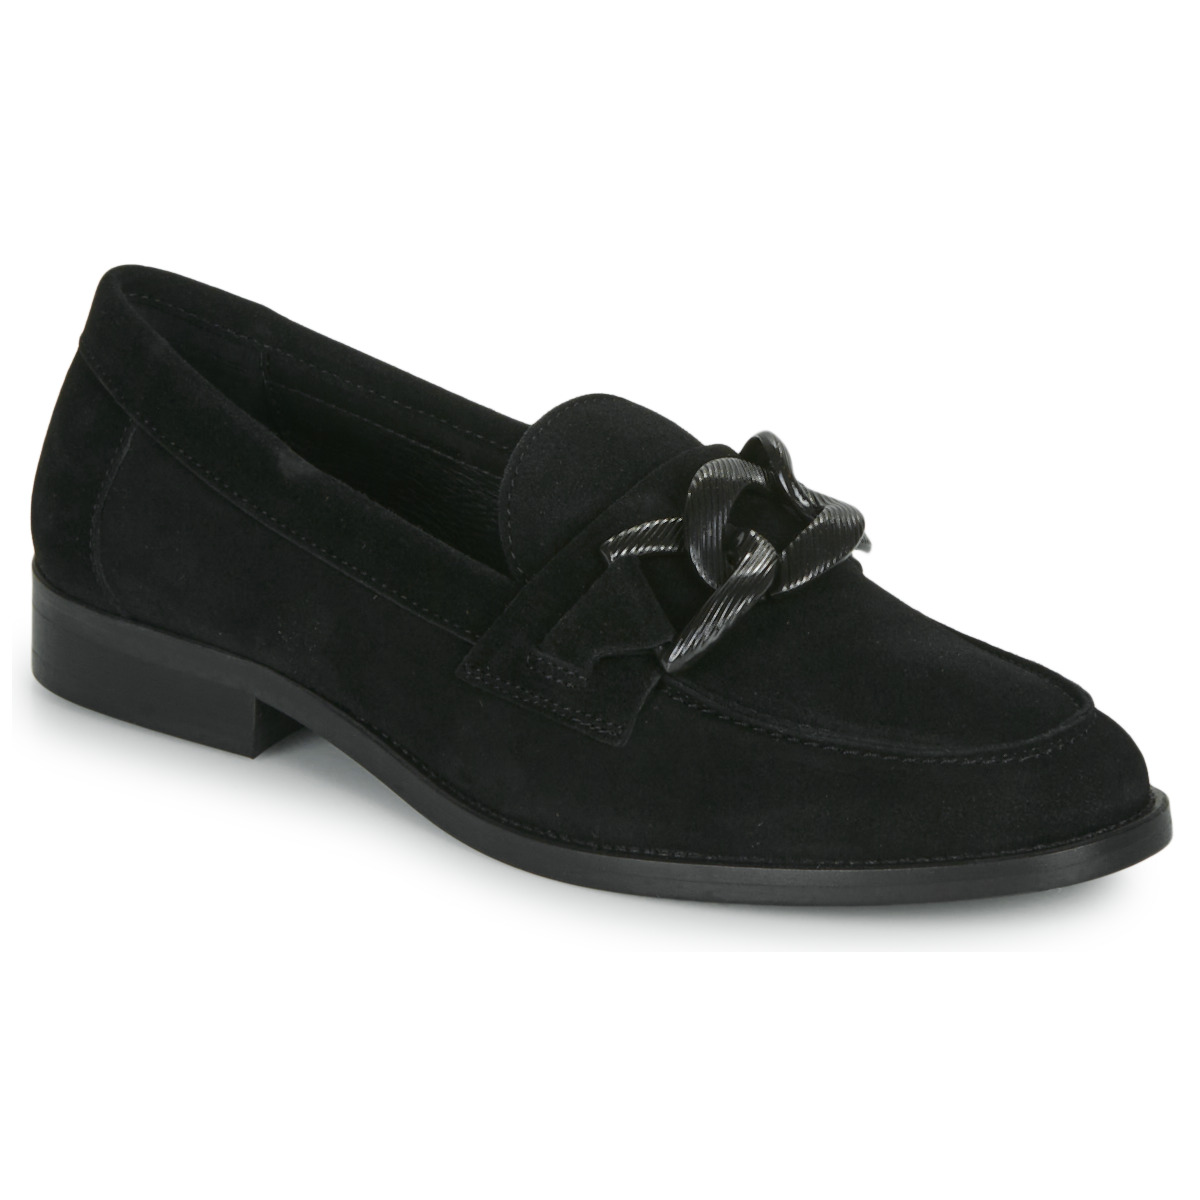 adige  elvis  women's loafers / casual shoes in black